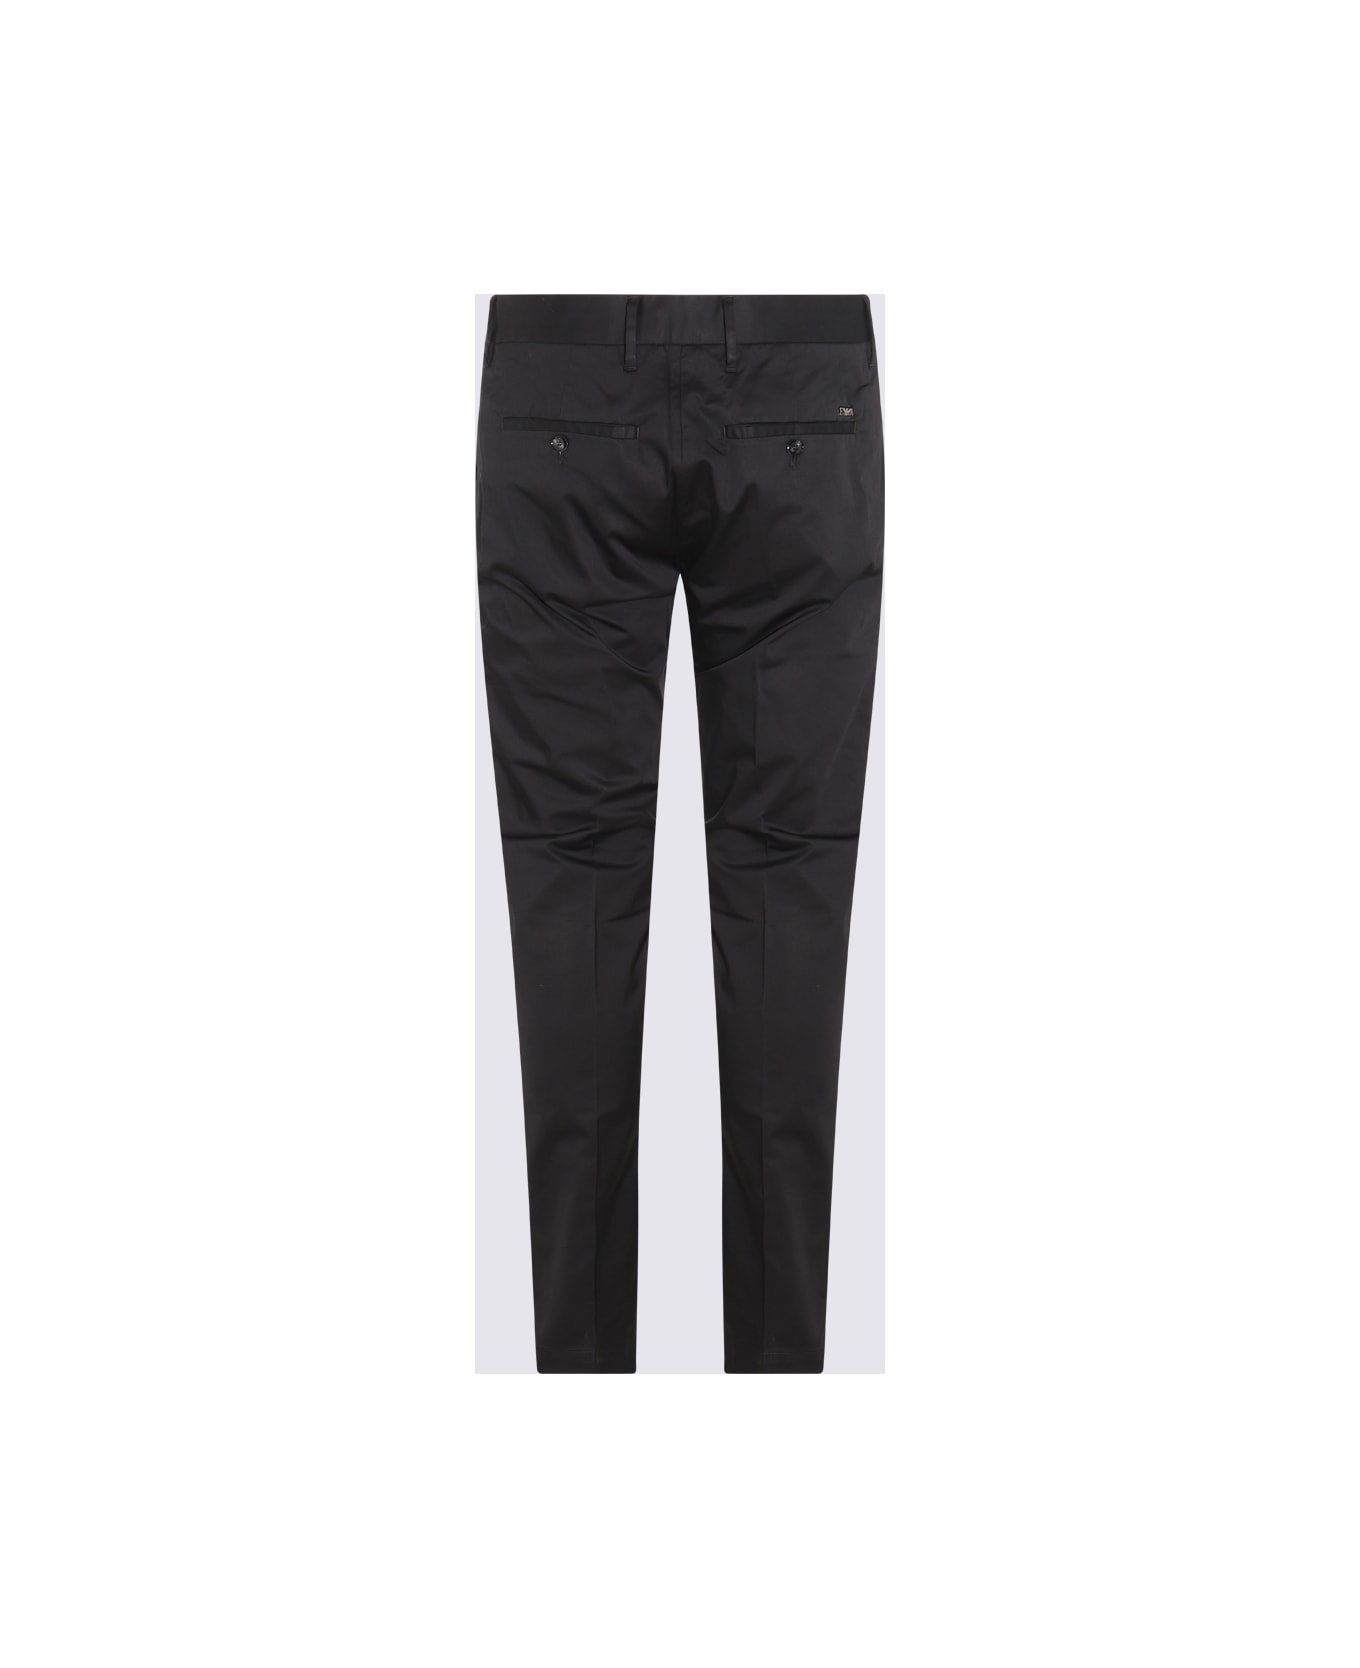 Emporio Armani Black Cotton Blend Pants - Black ボトムス